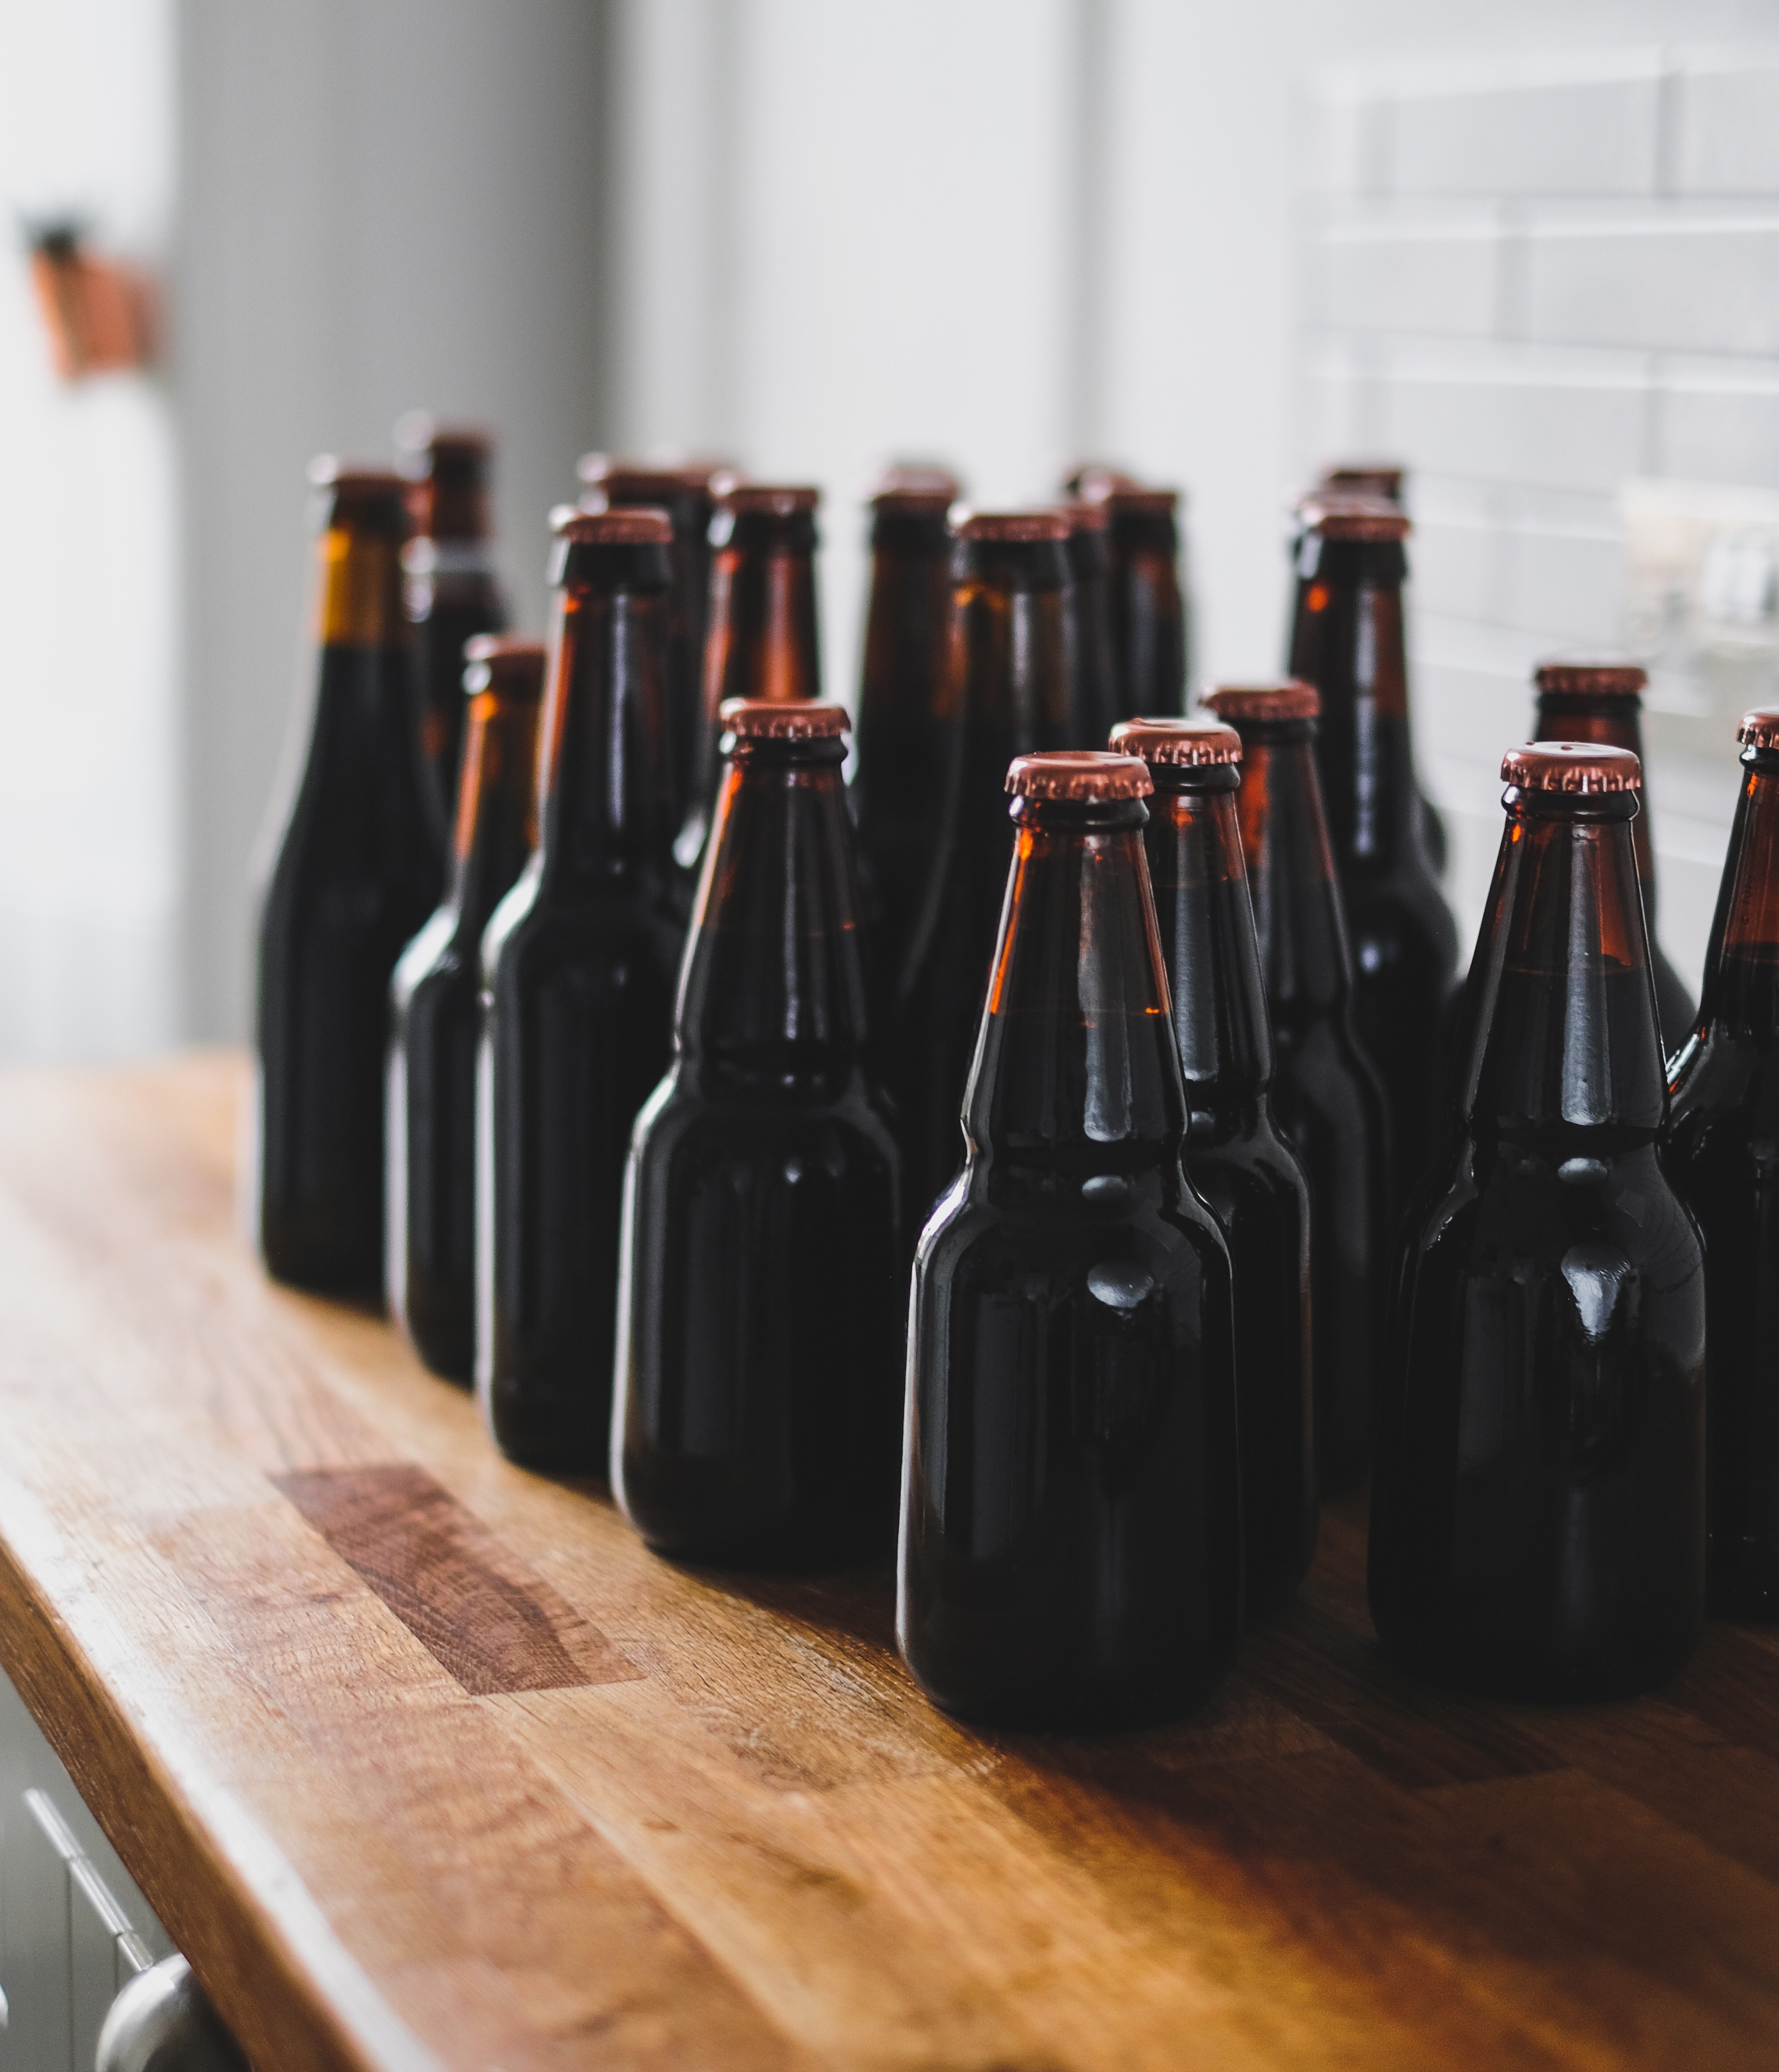 Brown beer bottles on wooden counter